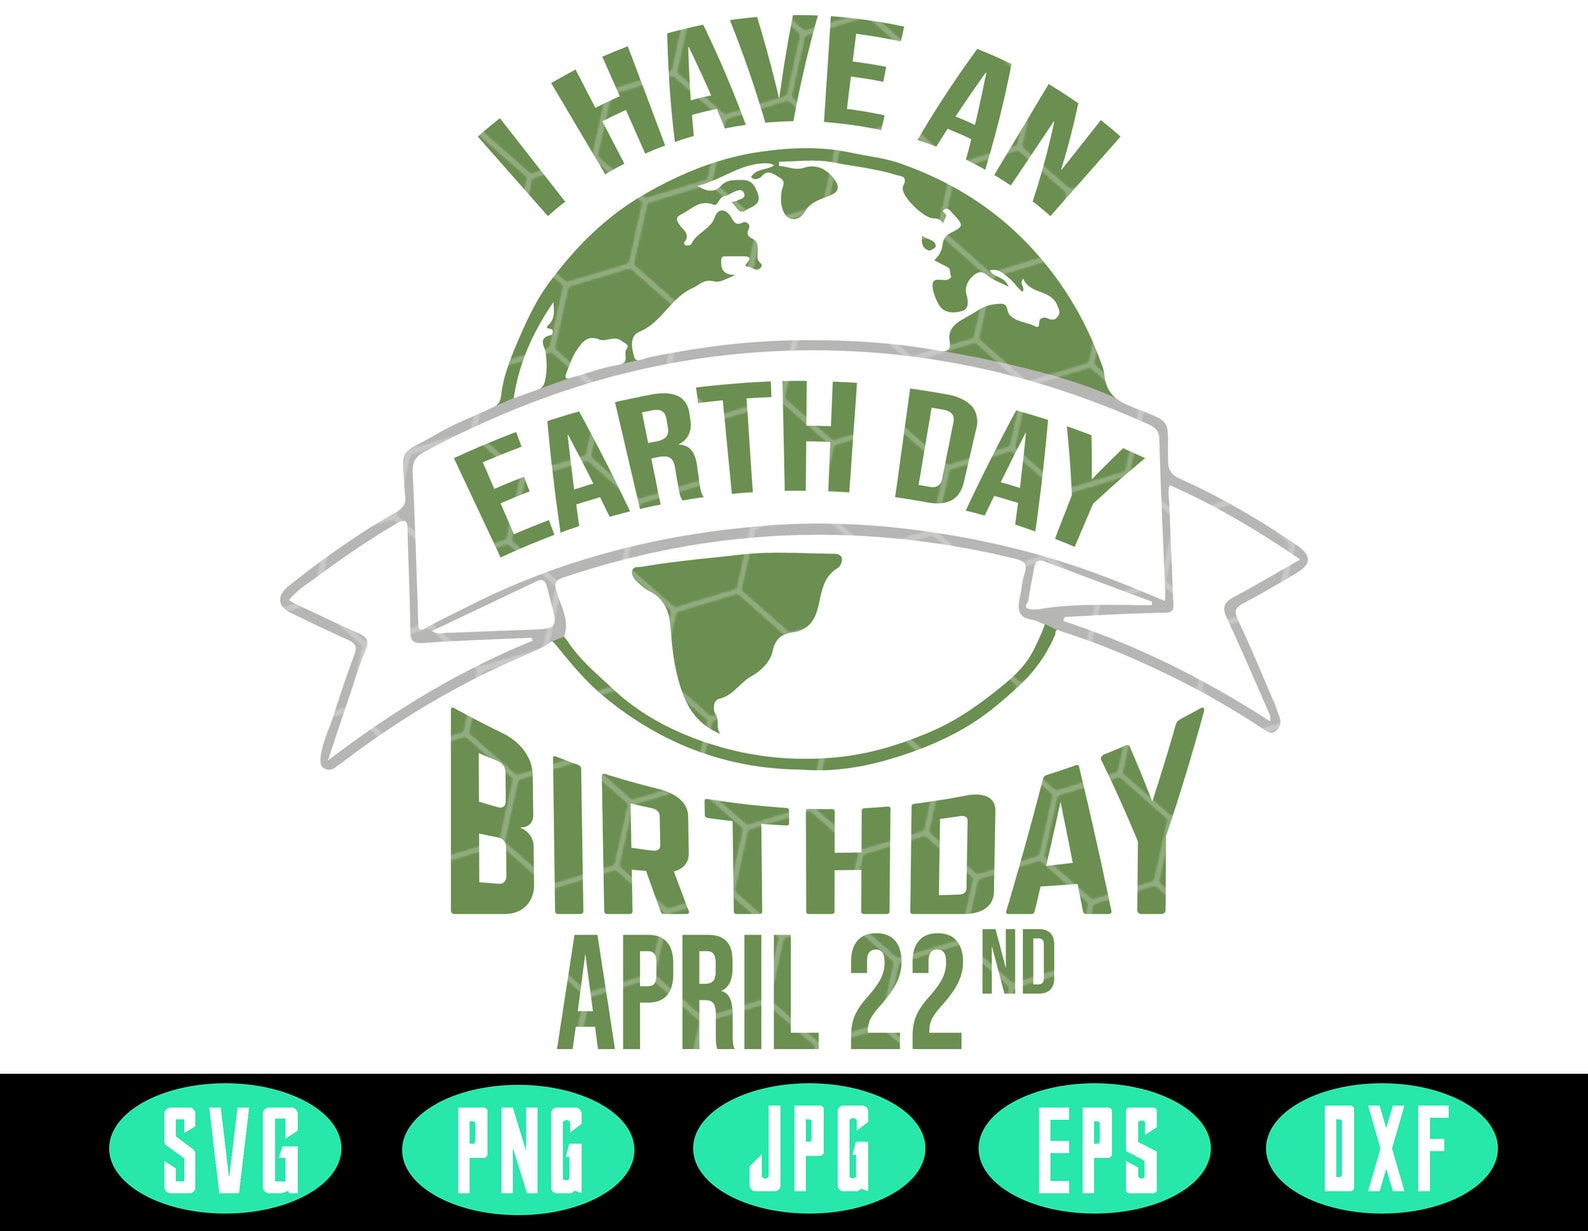 Earth Day Birthday April 22nd Svg Saving The Svg Etsy